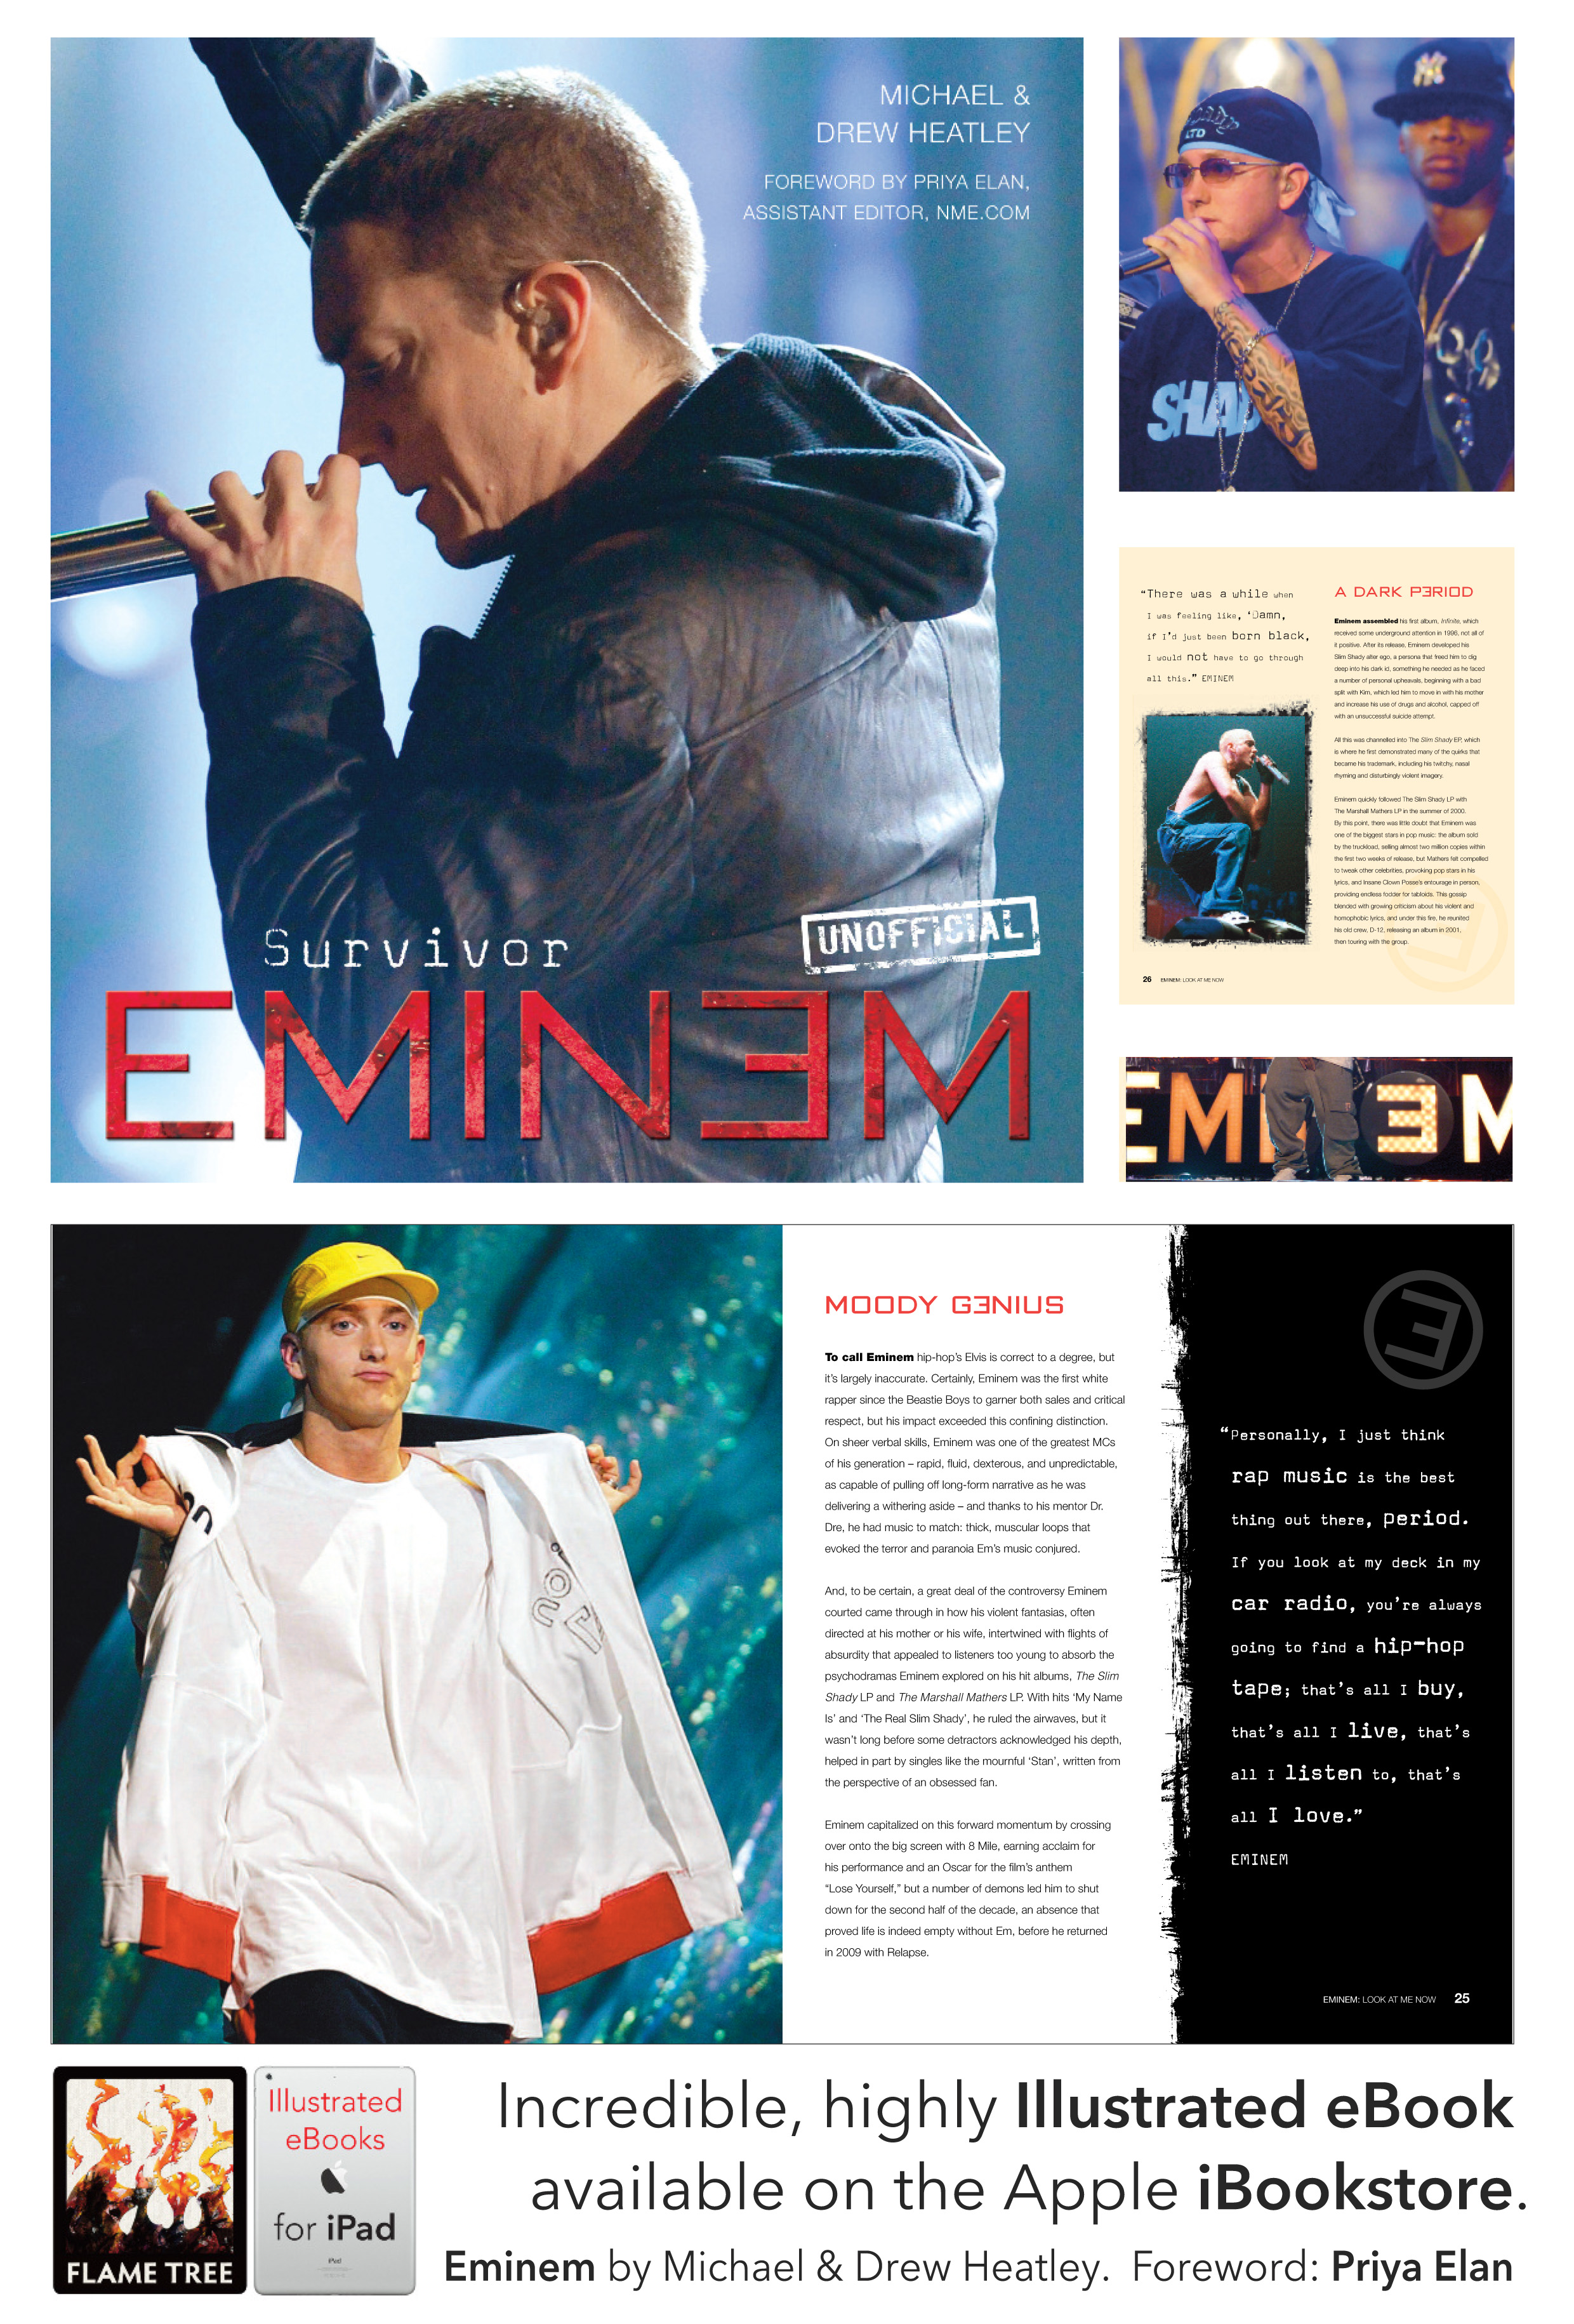 Eminem, illustrated ebook, ready for iPad